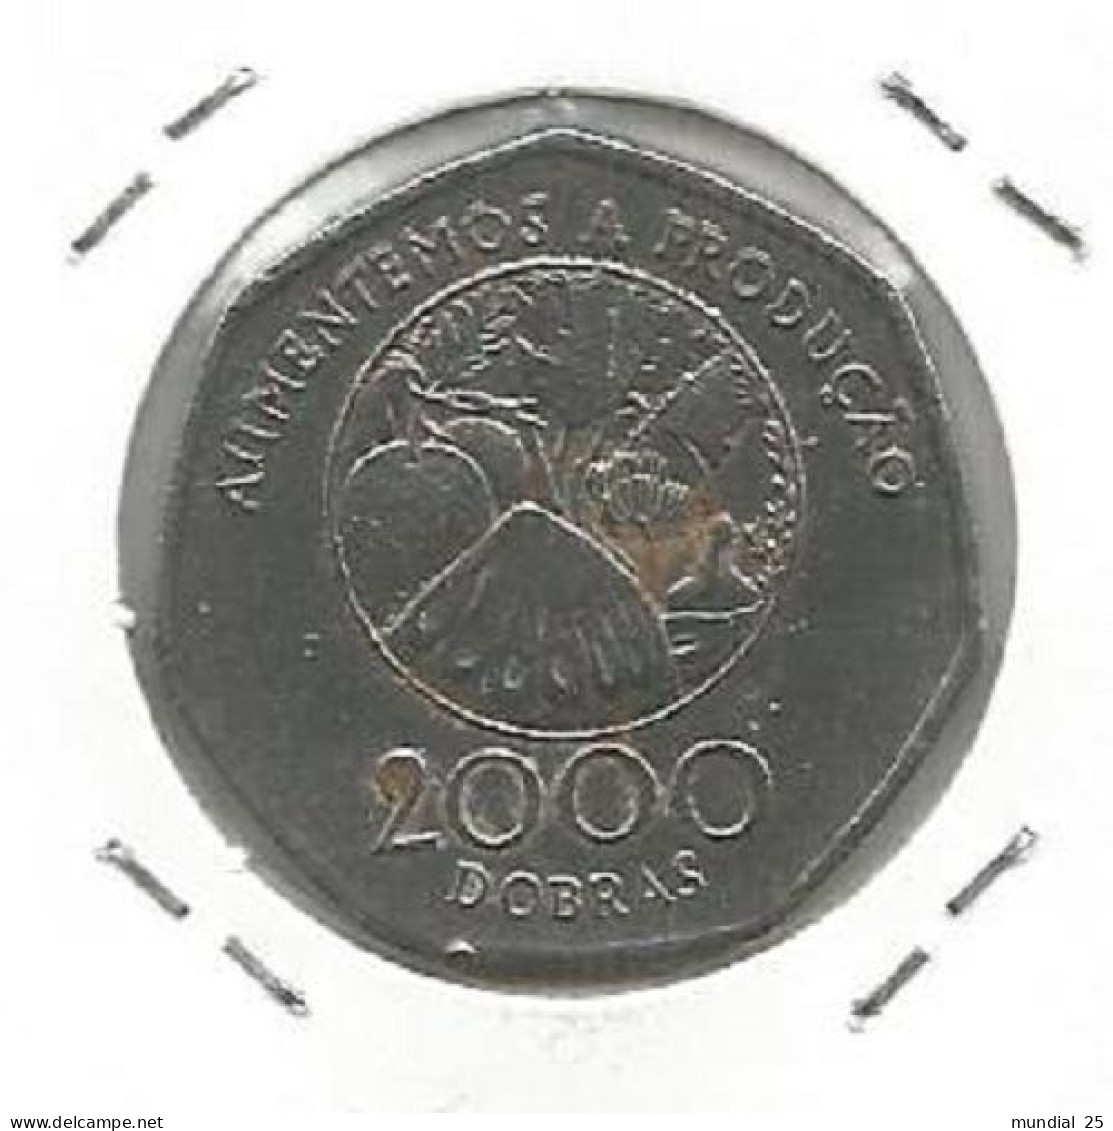 SAO TOME AND PRINCIPE 2.000 DOBRAS 1997 - Sao Tome And Principe